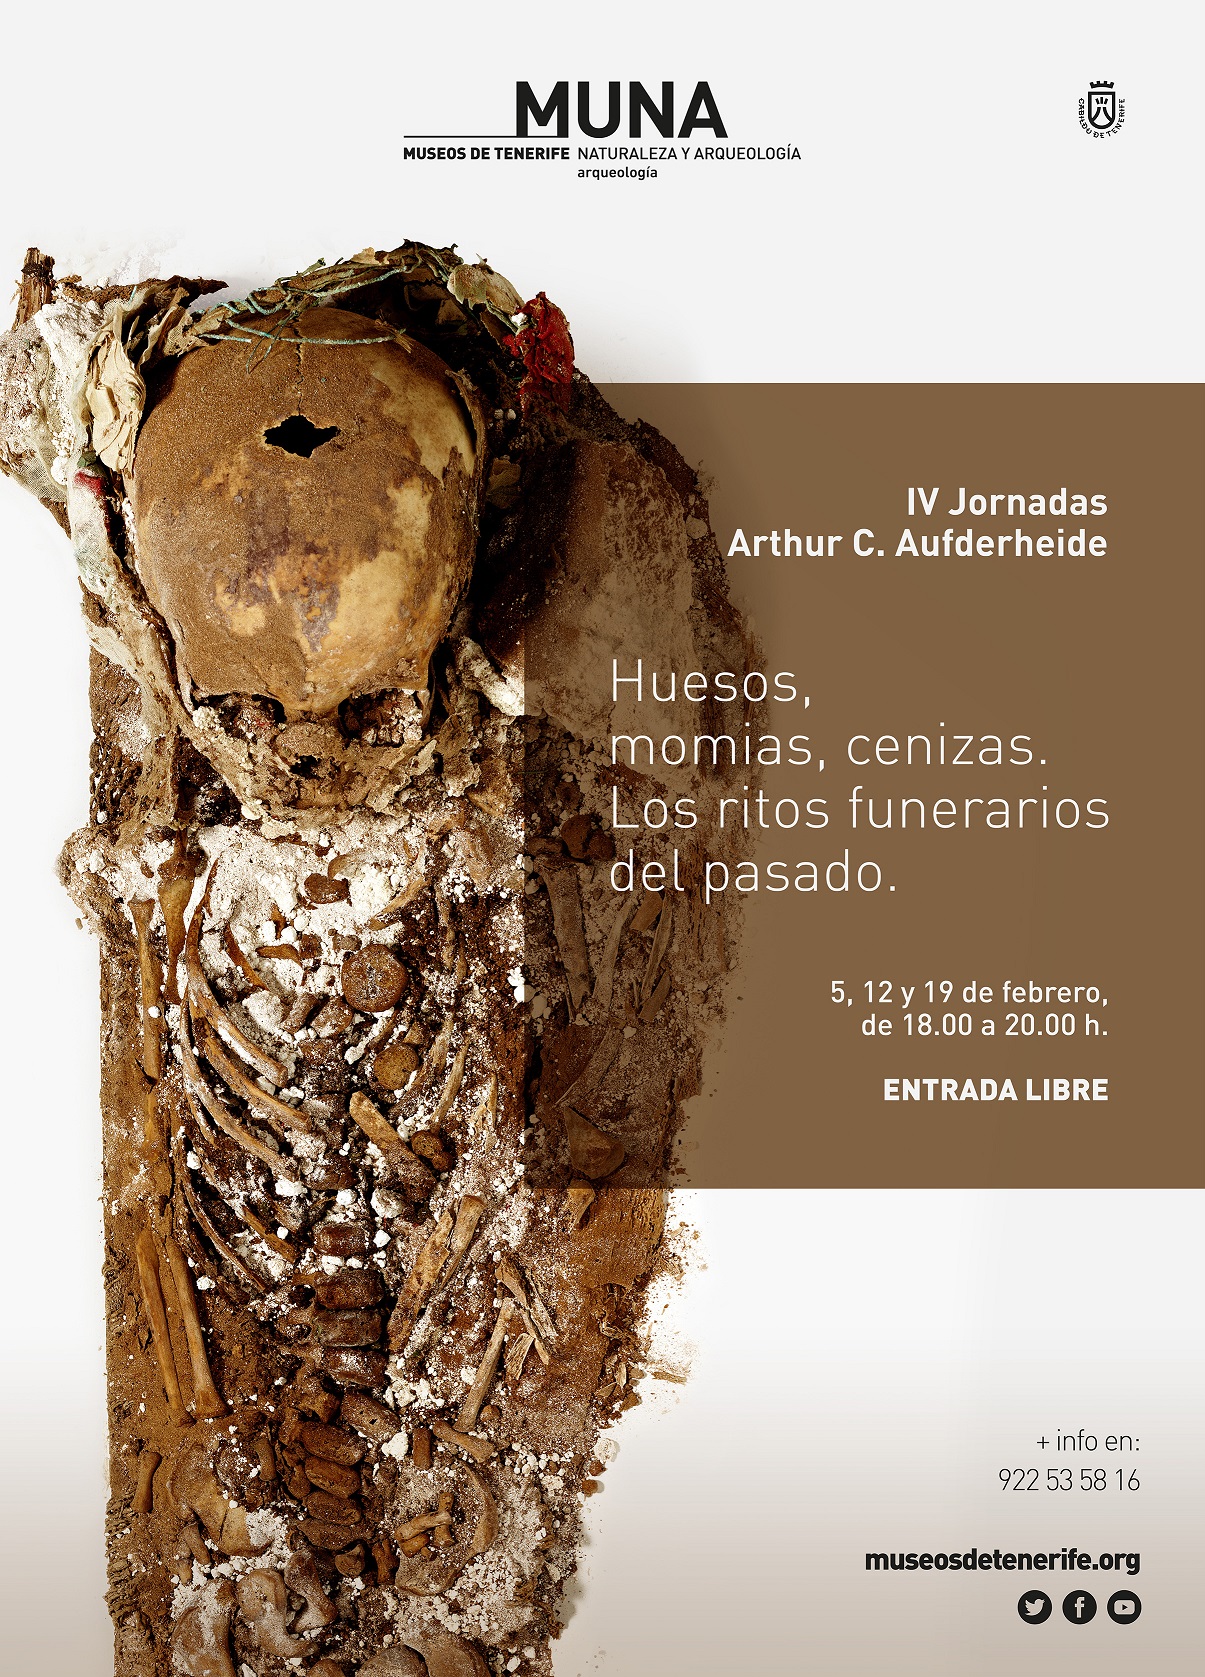 MUNA-Jornadas Huesos, momias, cenizas-Cartel 70x100 web